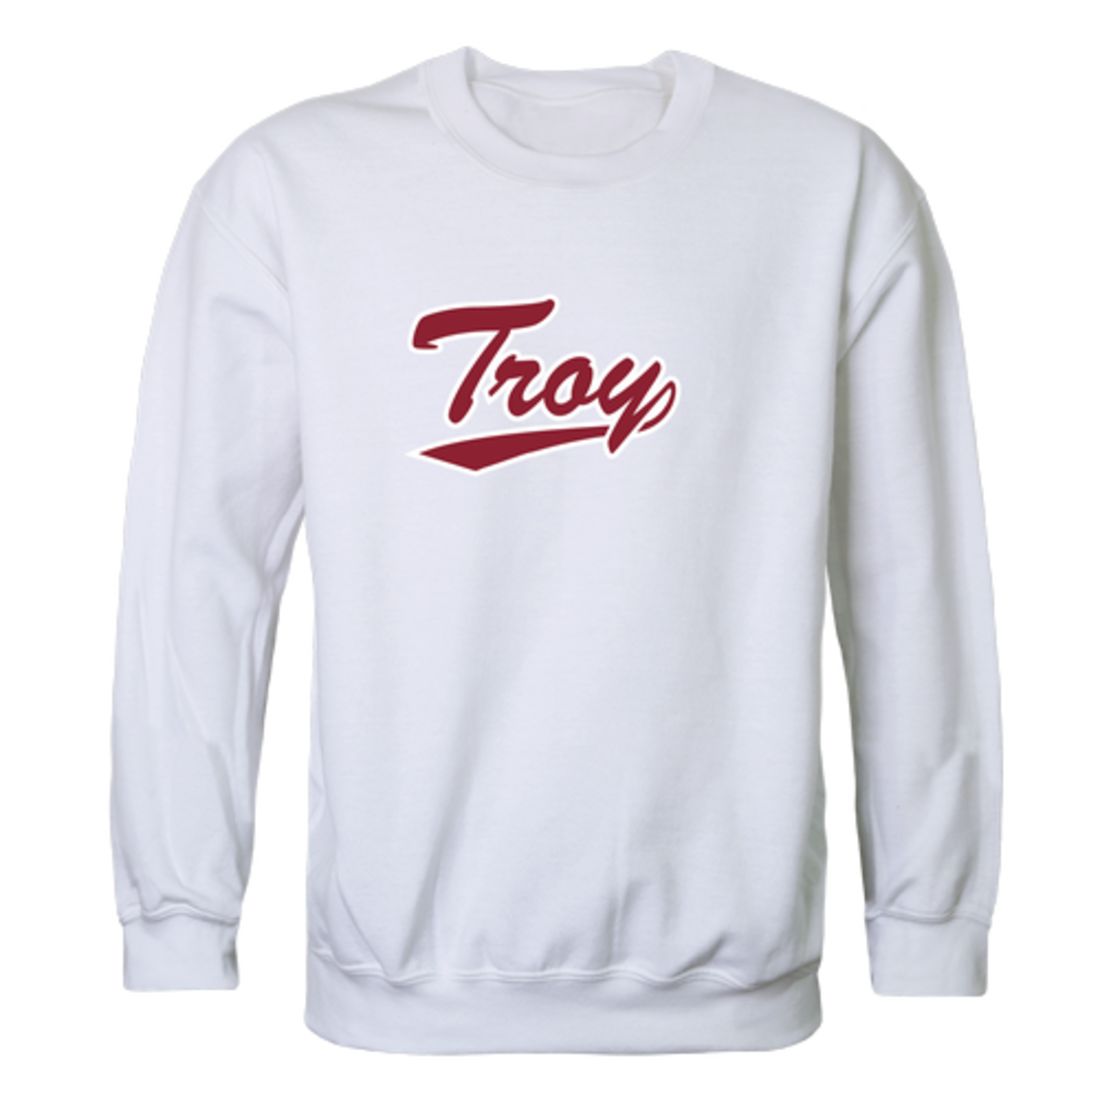 Troy University Trojans Script Crewneck Pullover Sweatshirt Sweater Black-Campus-Wardrobe